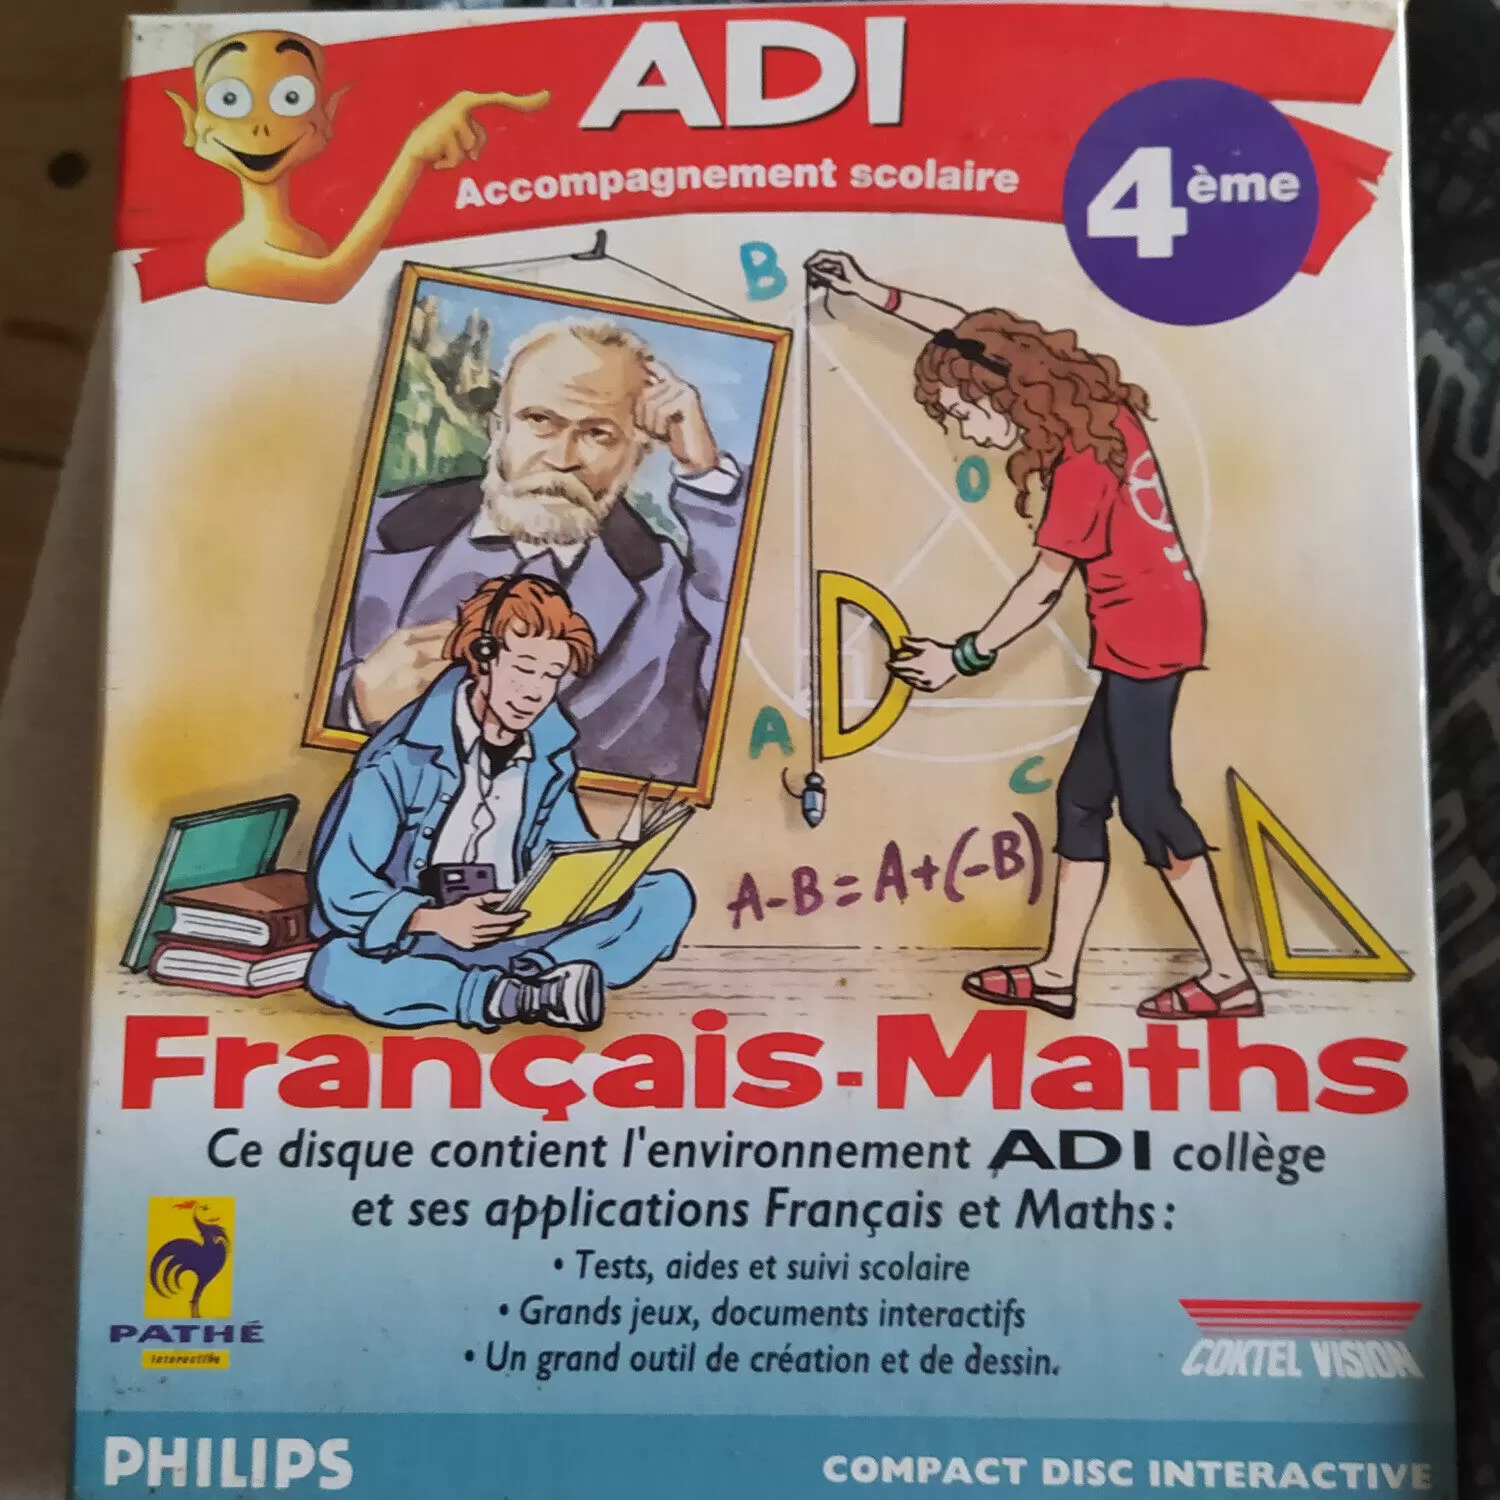 Philips CD-i - ADI accompagnement scolaire 4eme